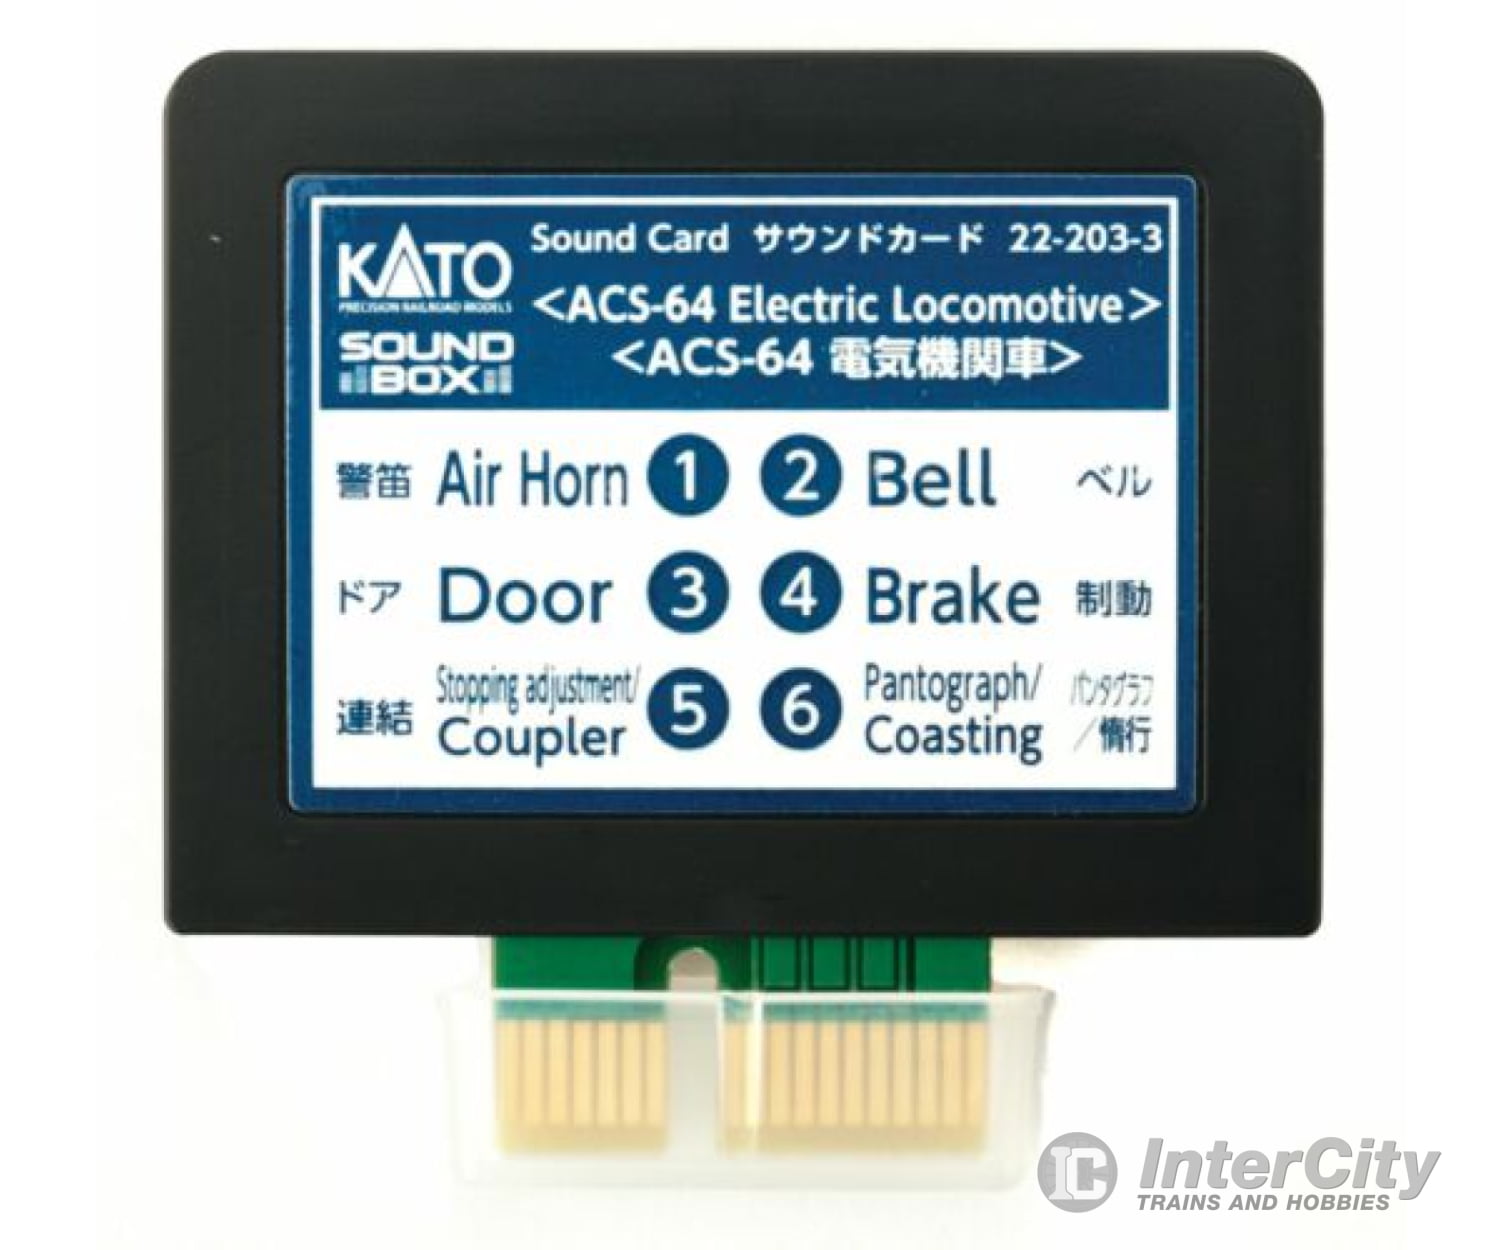 Kato Ho N Scale Sound Box Card - Acs-64 Electric Locomotive Analog Throttles & Power